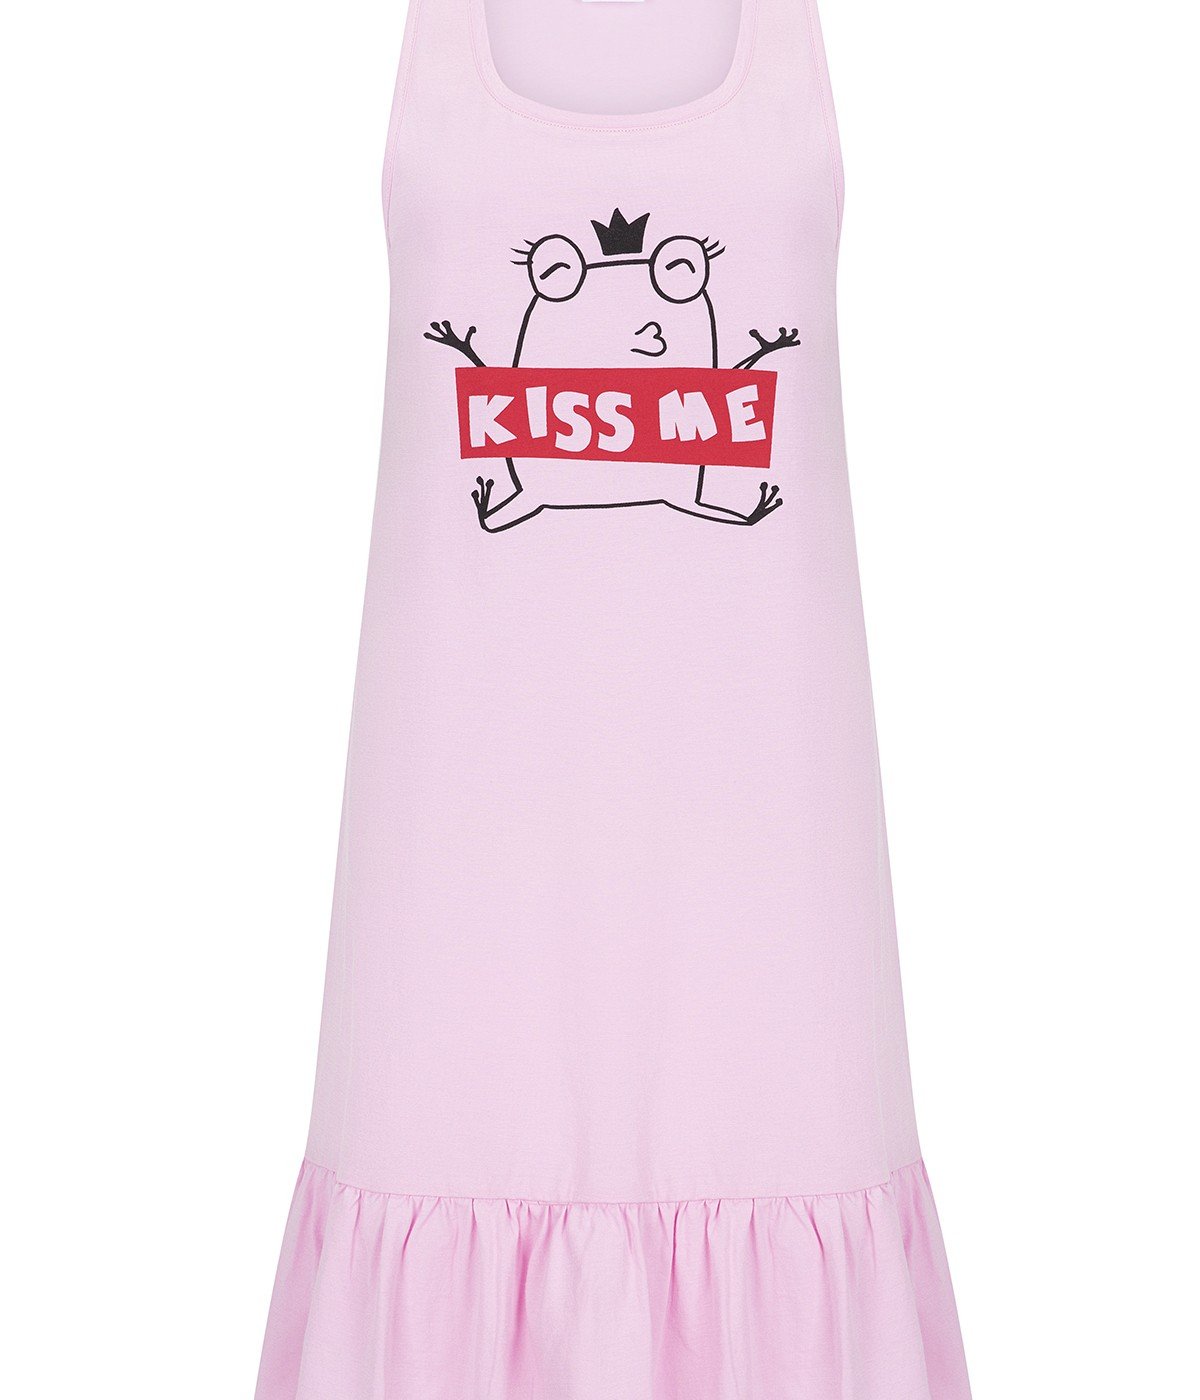 Kiss Me Dress